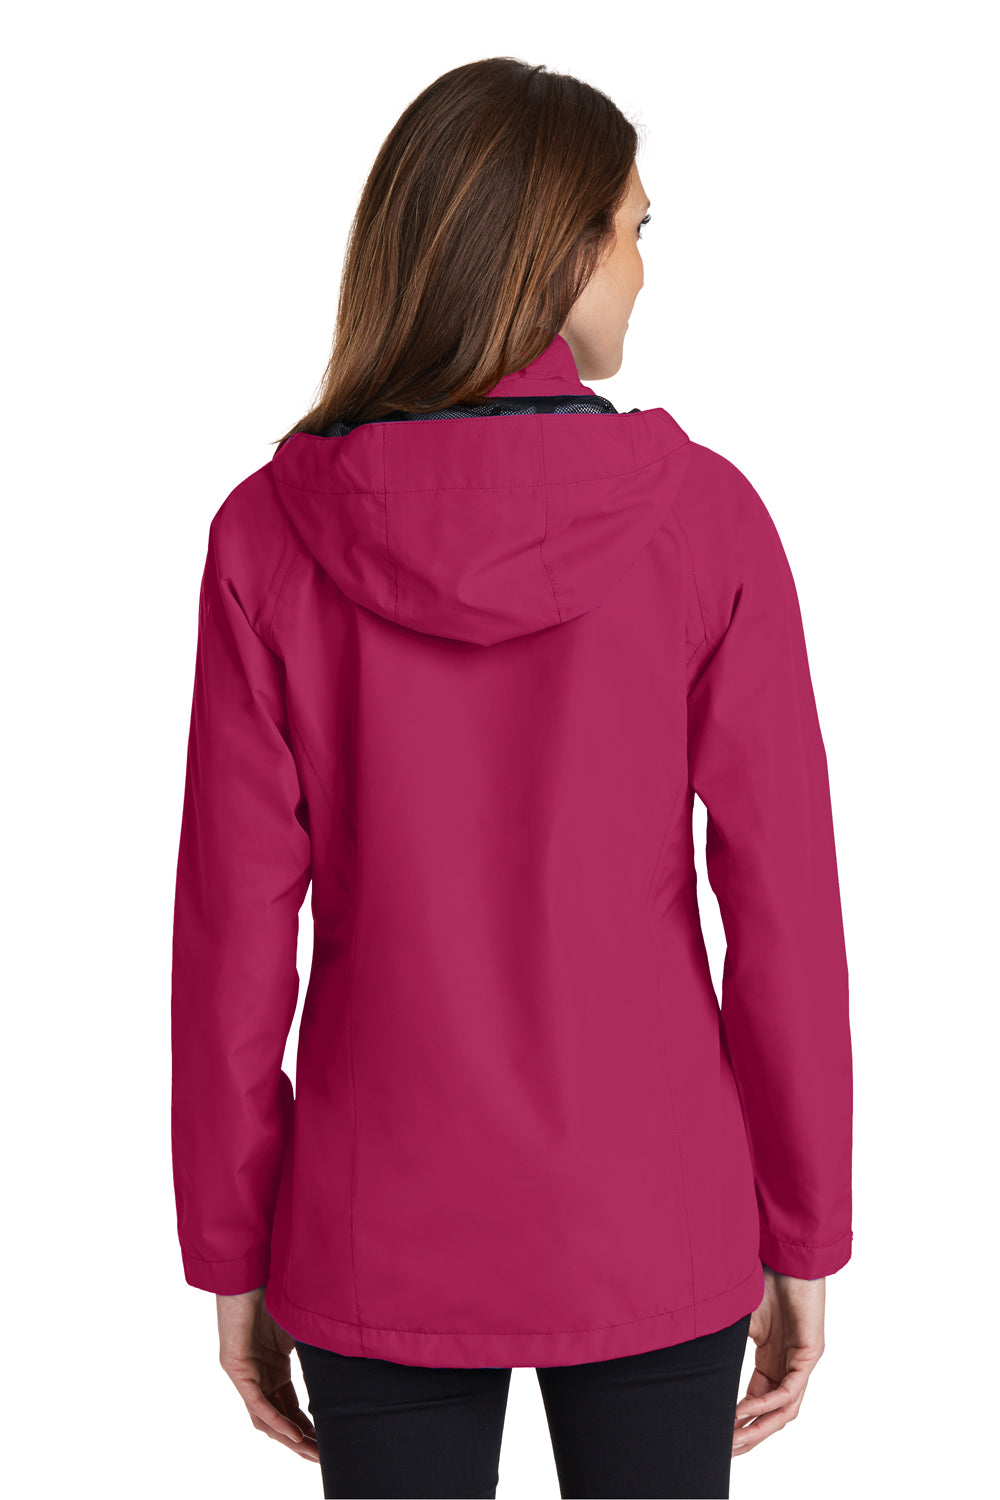 Port Authority L333 Womens Torrent Waterproof Full Zip Hooded Jacket Fuchsia Pink Back